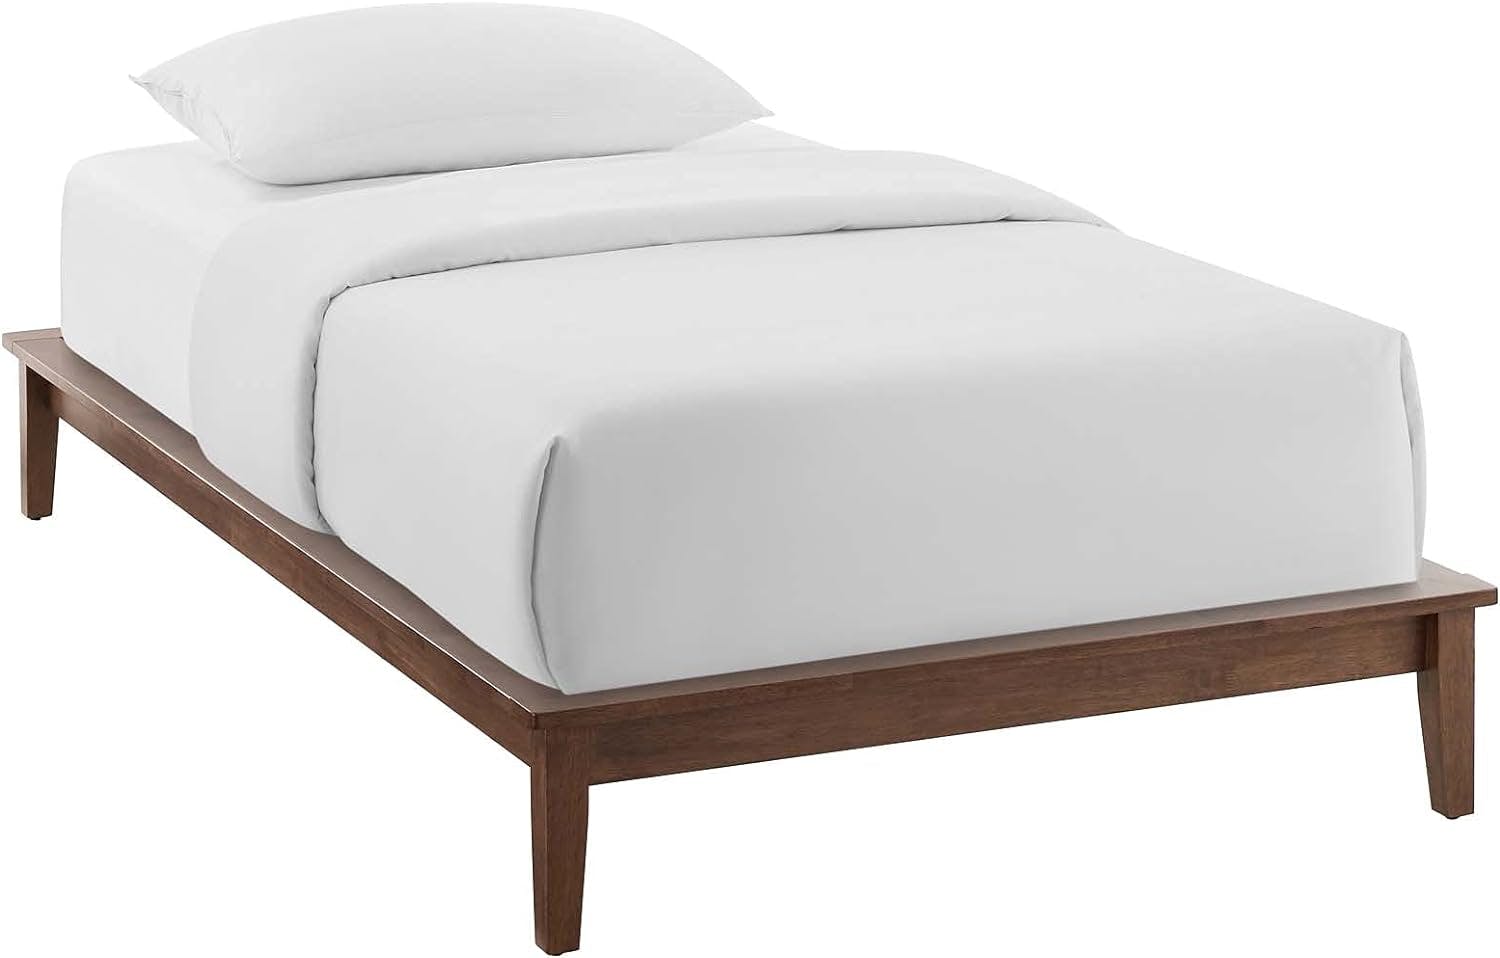 Walnut Twin Wood Platform Bed Frame with LVL Slats